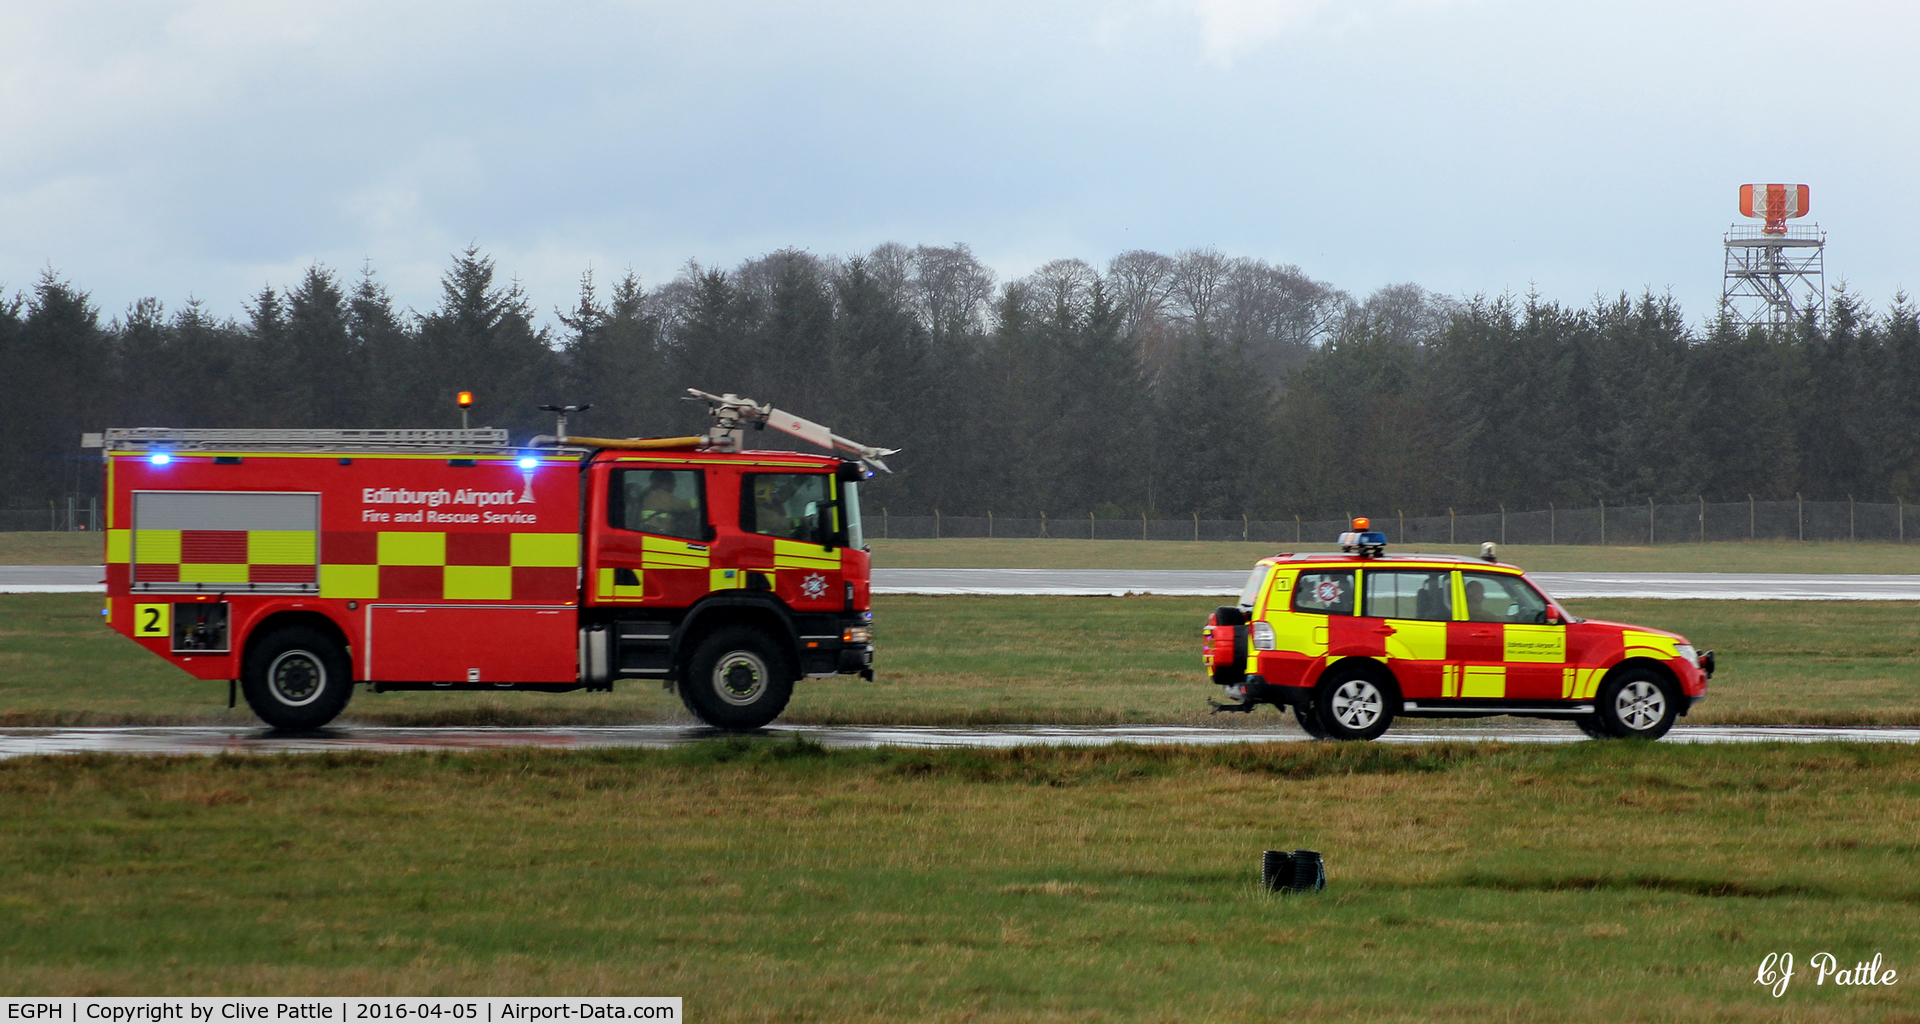 Edinburgh Airport, Edinburgh, Scotland United Kingdom (EGPH) - Emergency vehicles in action at Edinburgh EGPH during an incident